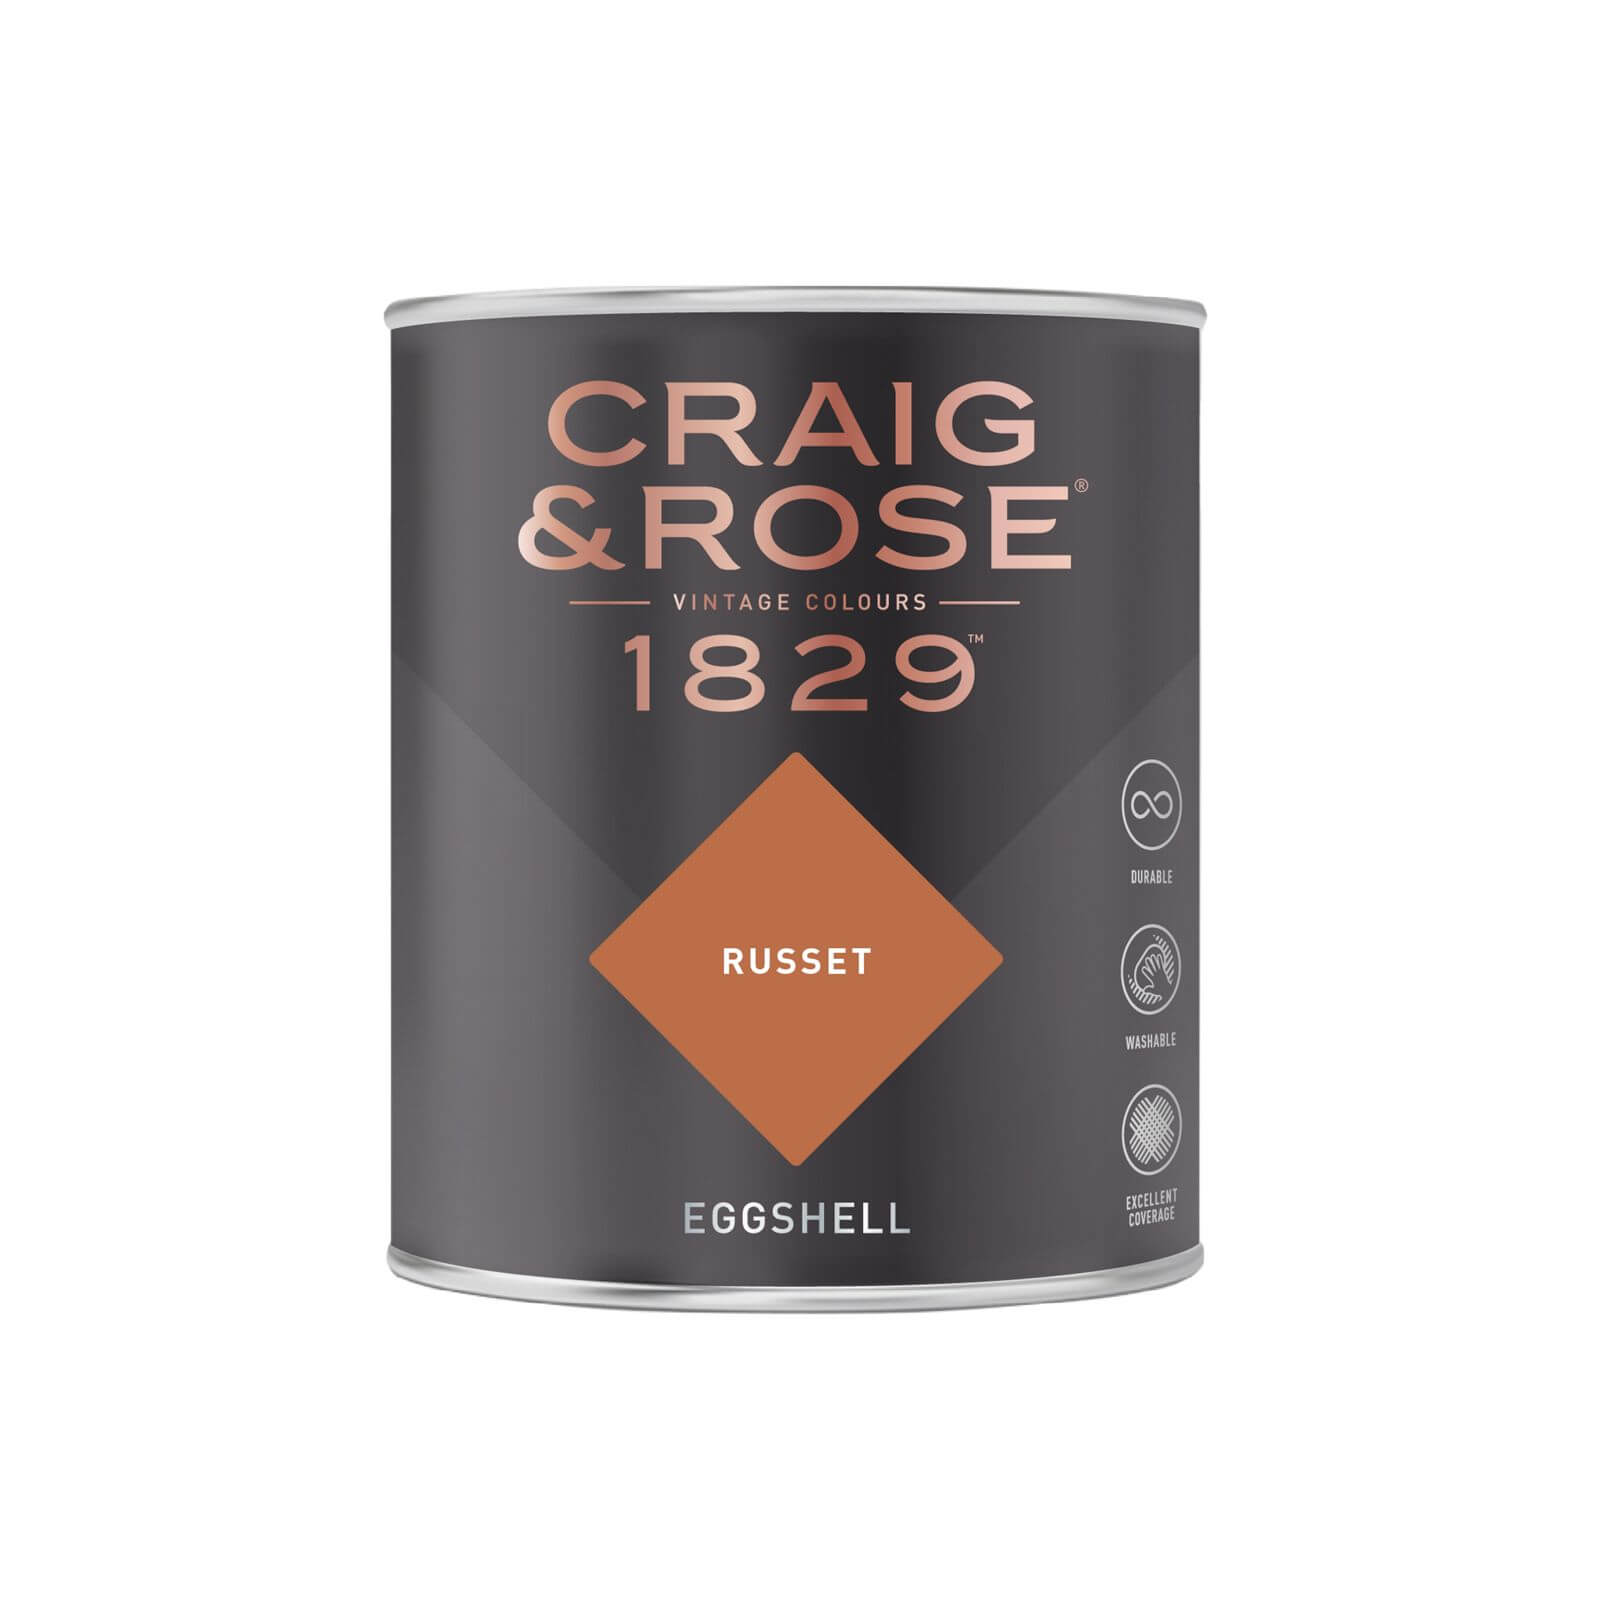 Craig & Rose 1829 Eggshell Paint Russet - 750ml